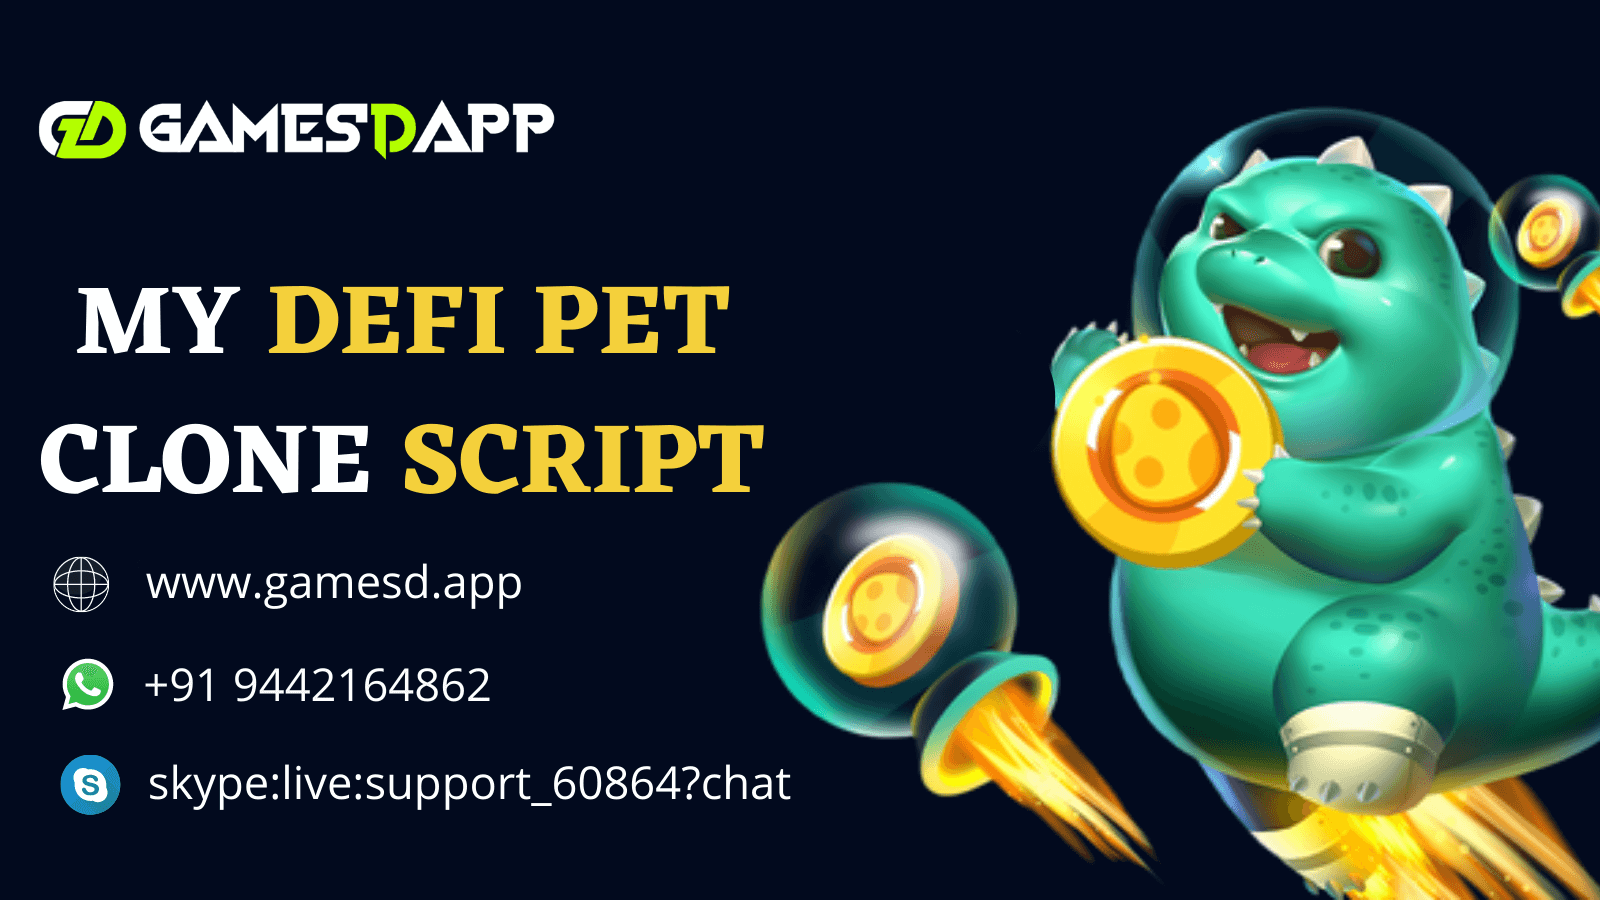 My DeFi Pet Clone Script - To Launch P2E NFT and DeFi Blockchain Game like My DeFi Pet